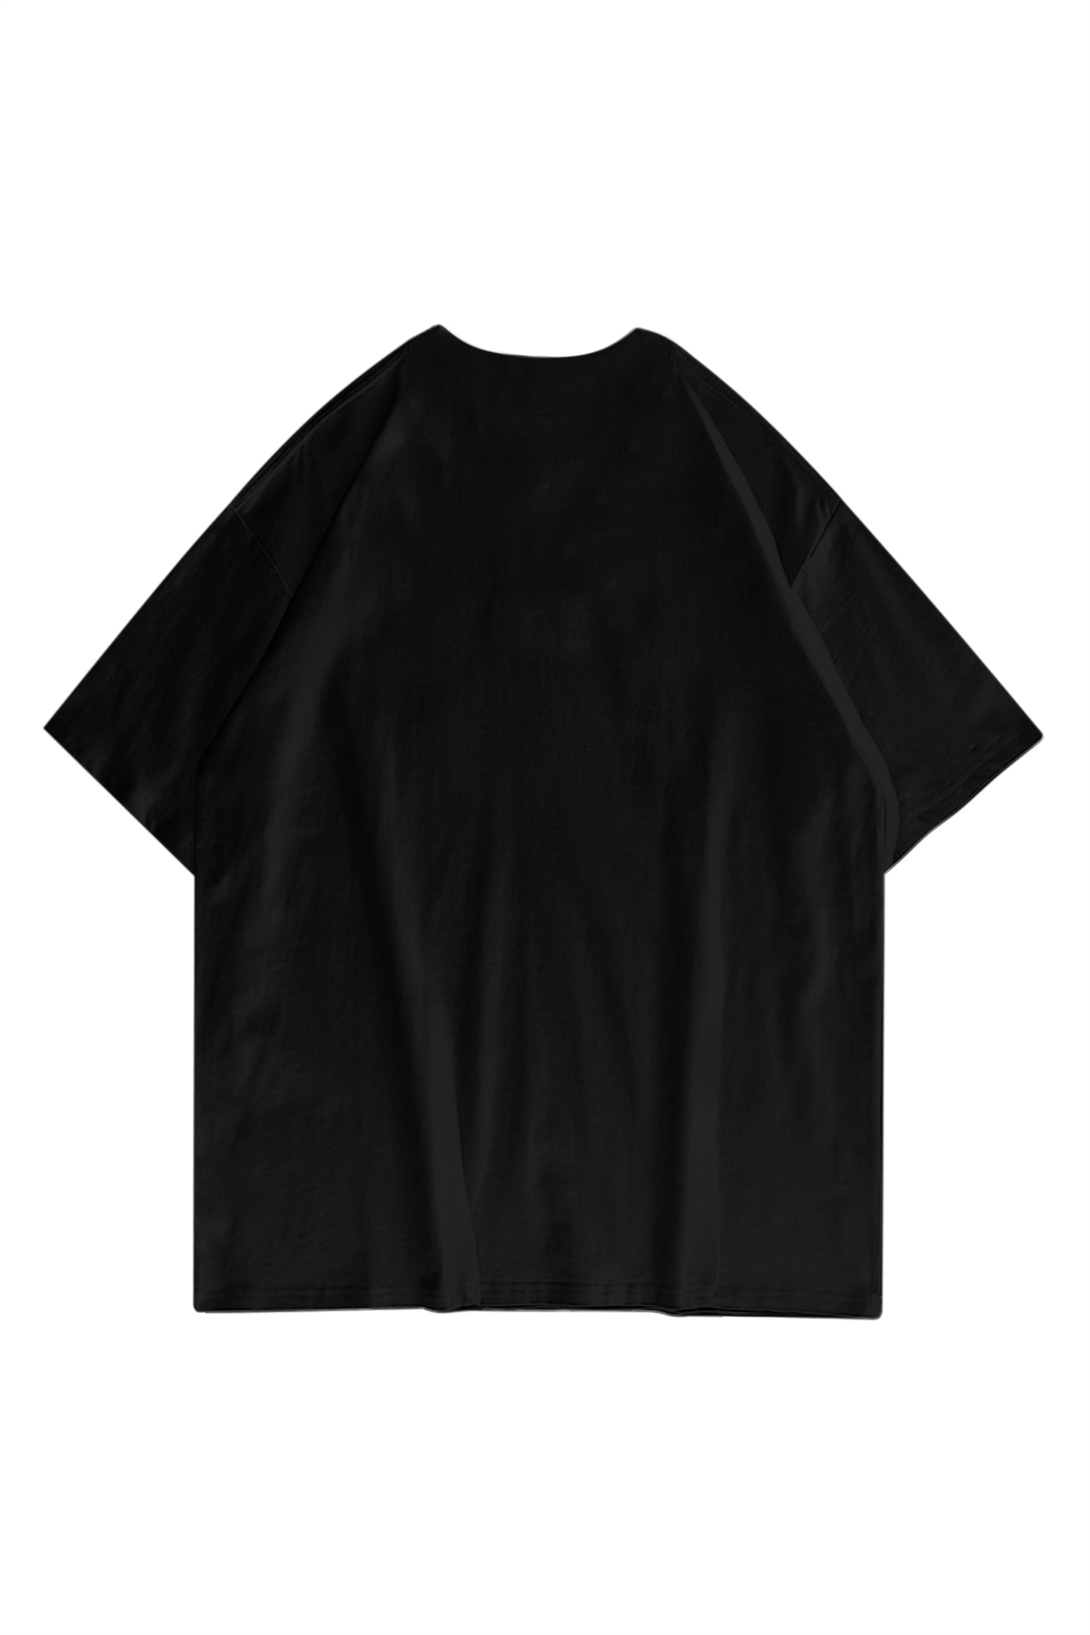 Trendiz Unisex Fashionista Siyah Tshirt